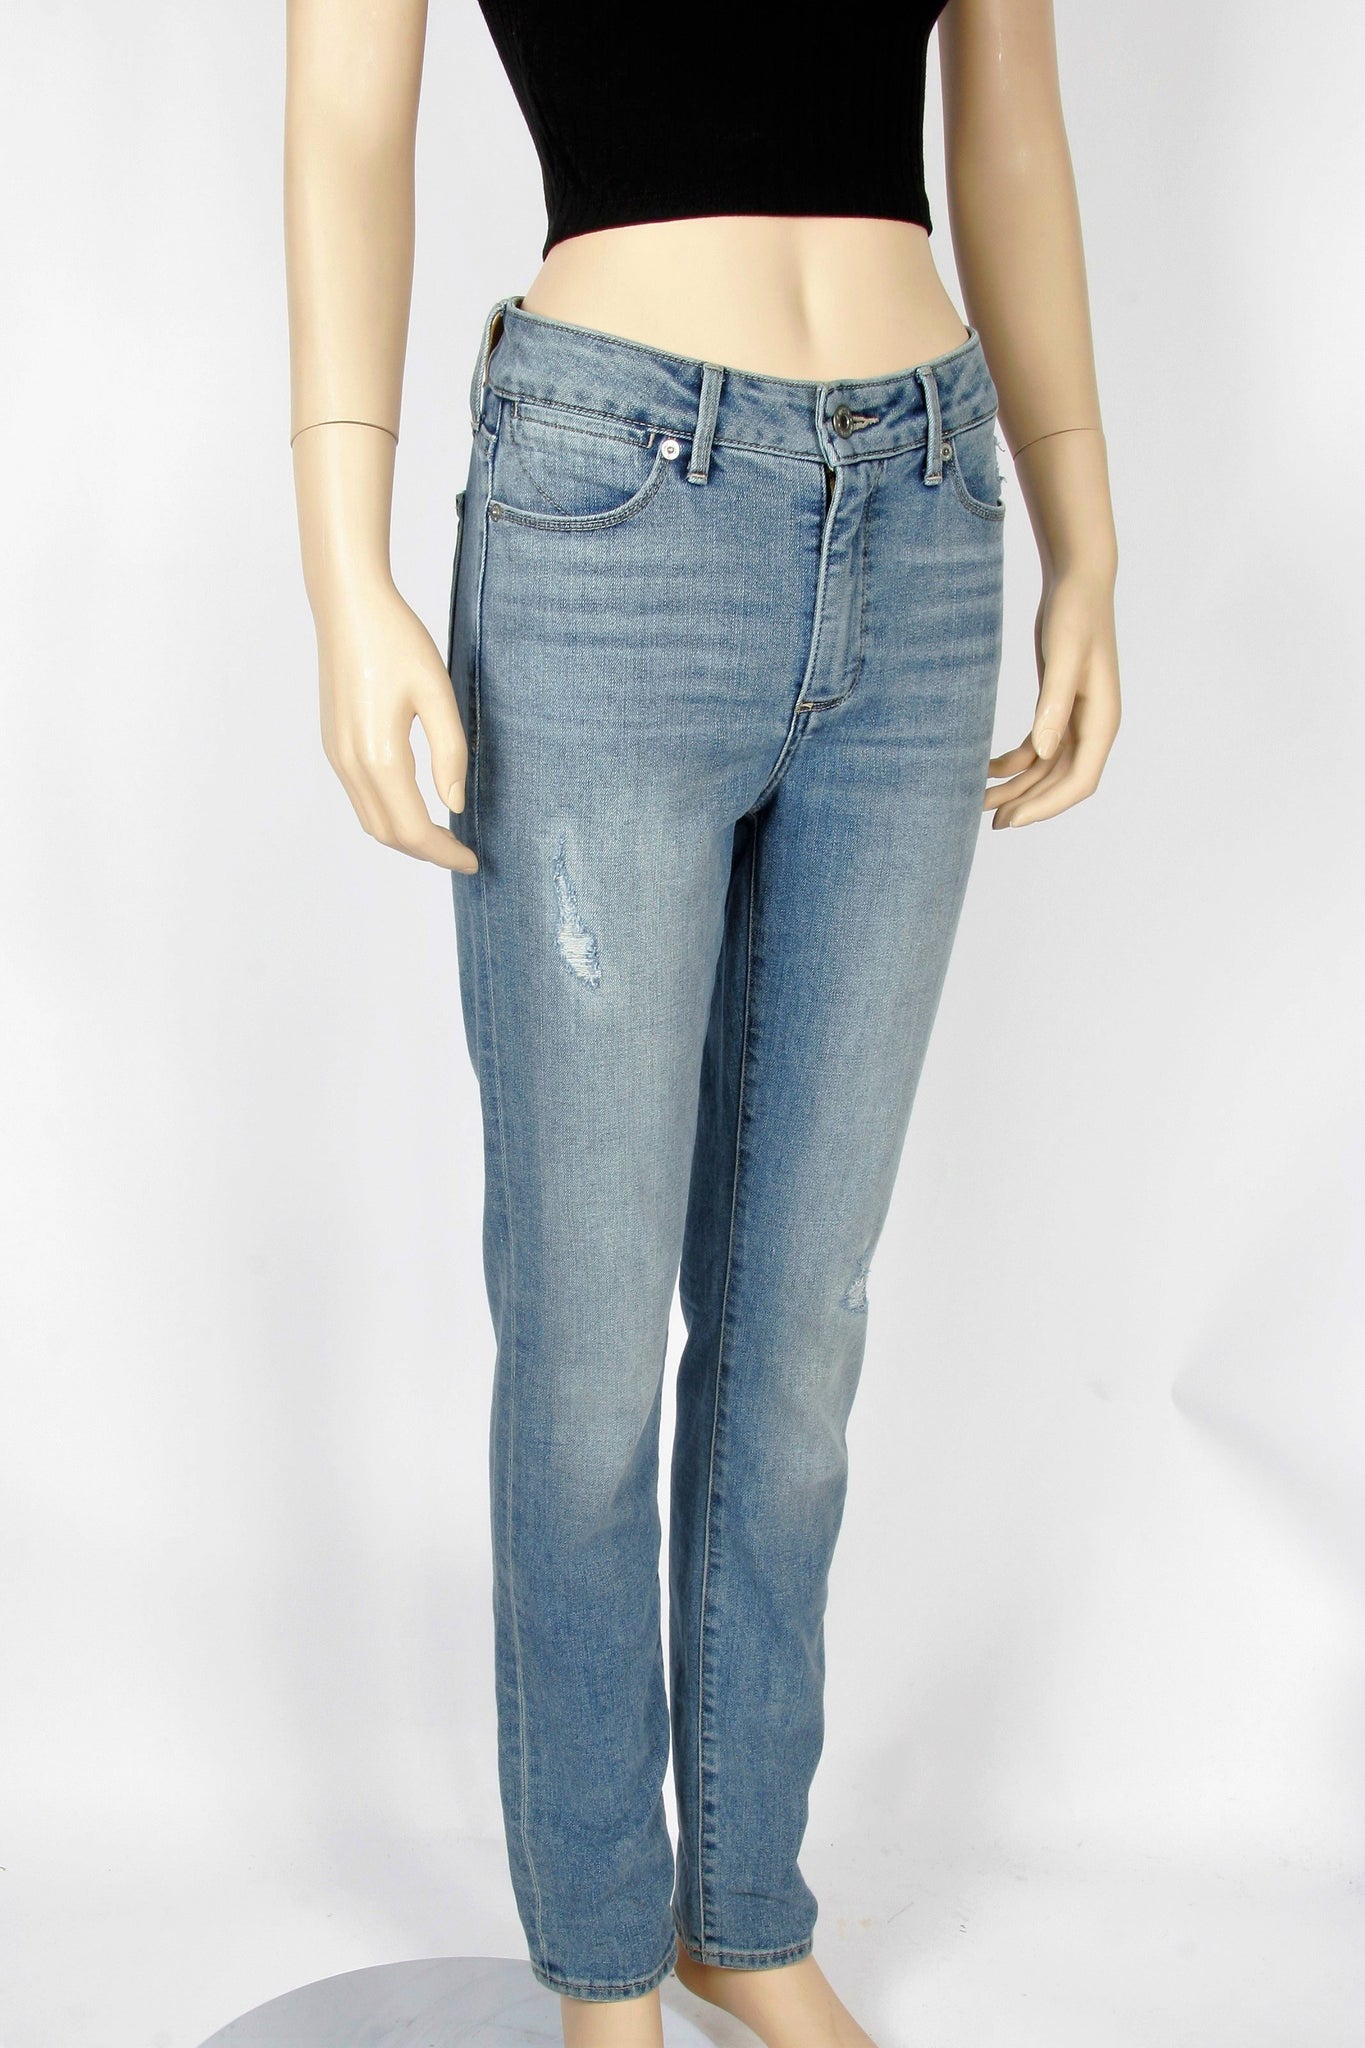 size 4 jeans